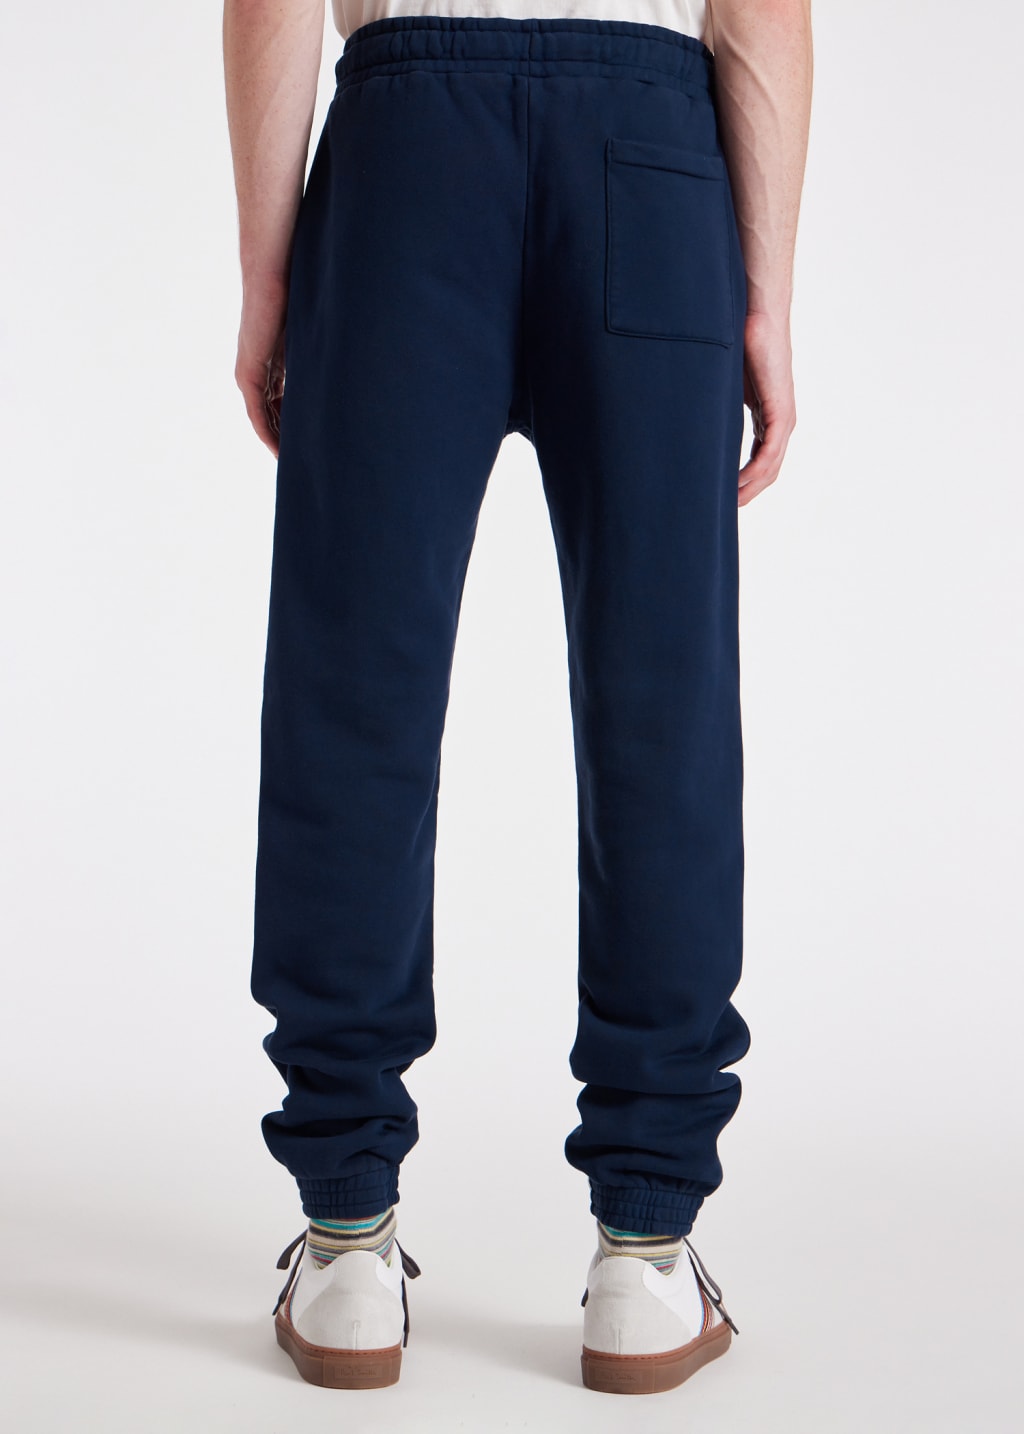 Model View - Navy Cotton 'Happy' Sweatpants Paul Smith 